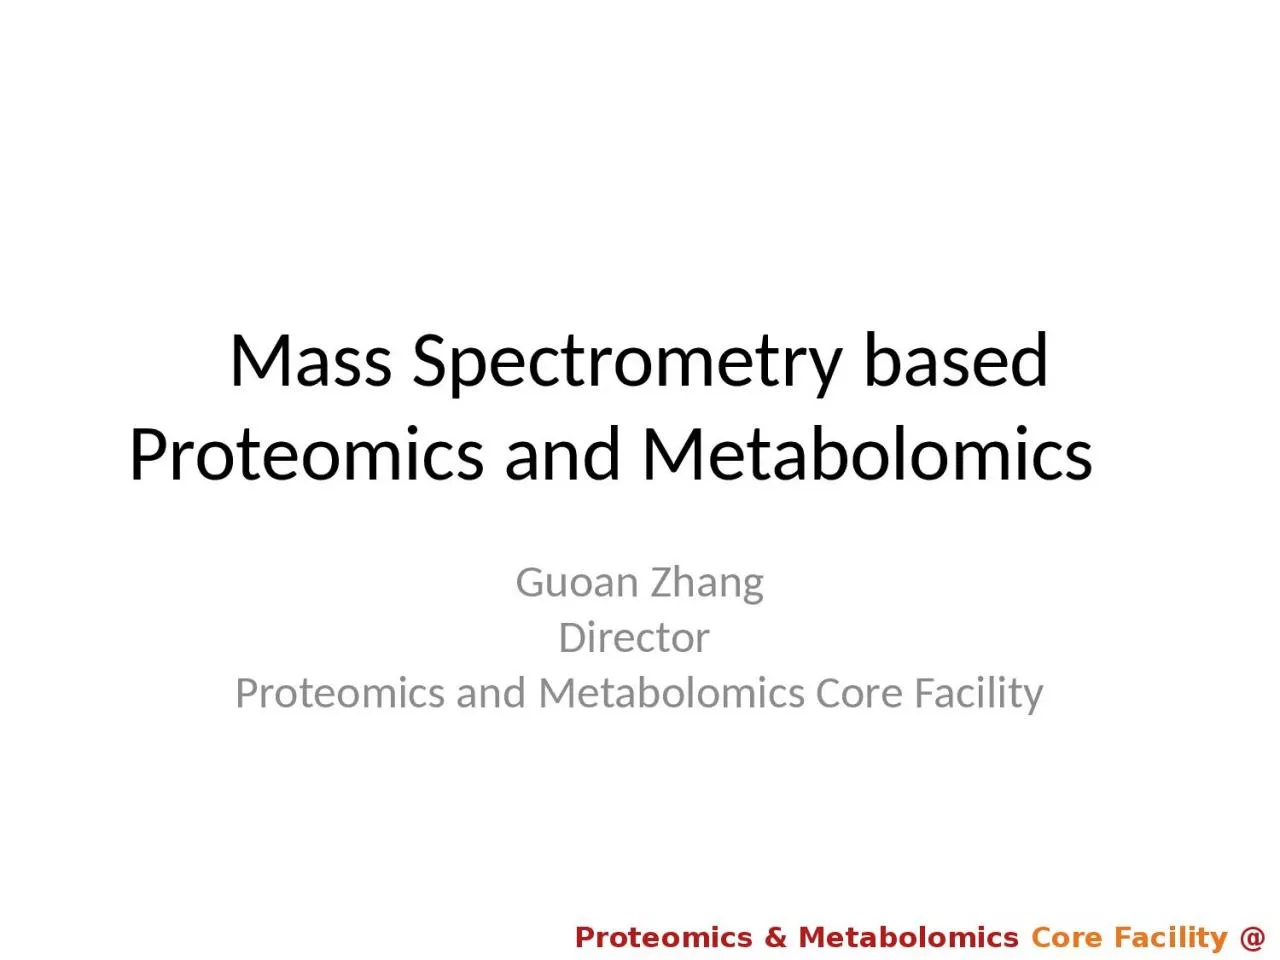 Mass Spectrometry based Proteomics and Metabolomics